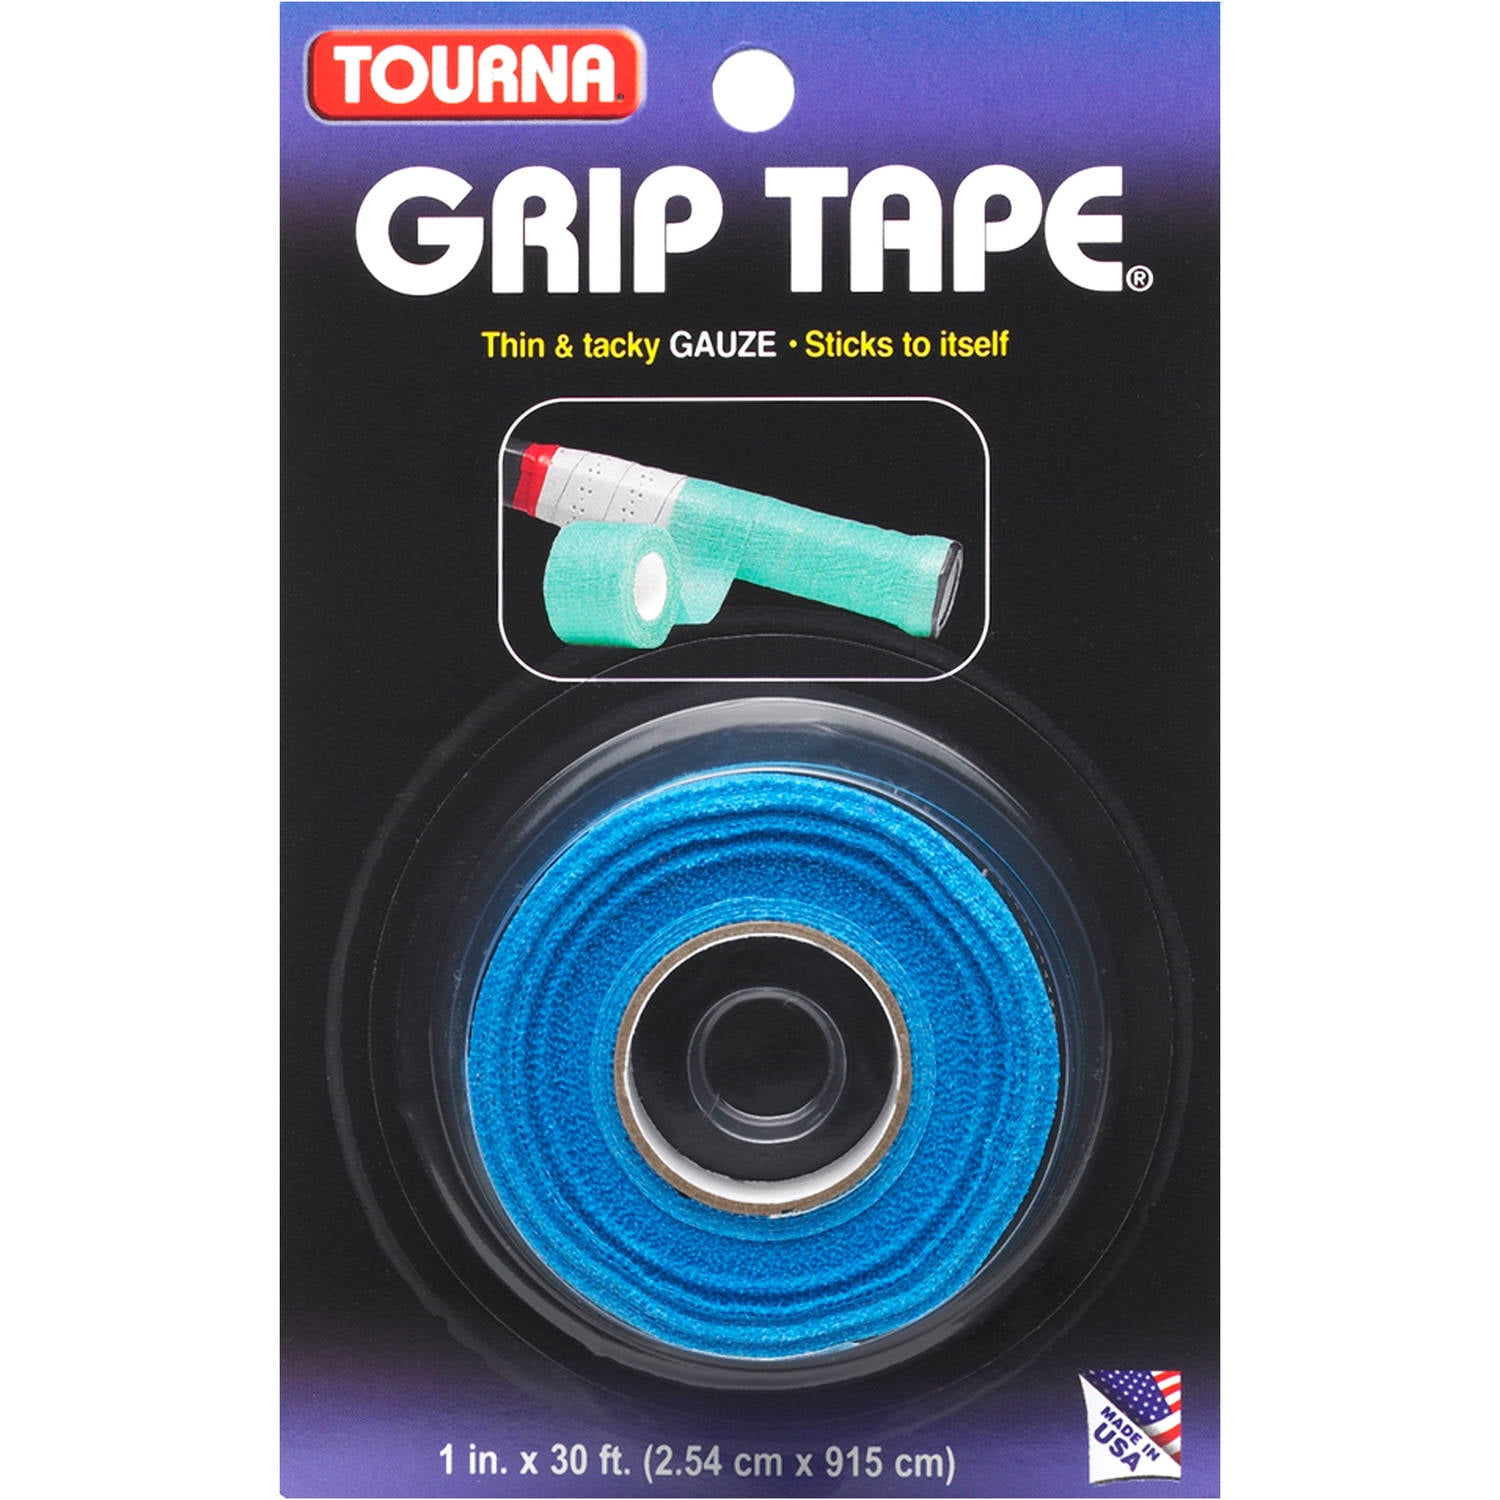 Tennis Racket Grip Tape selection Tennis Badminton Rackets Tool Grip Tape 